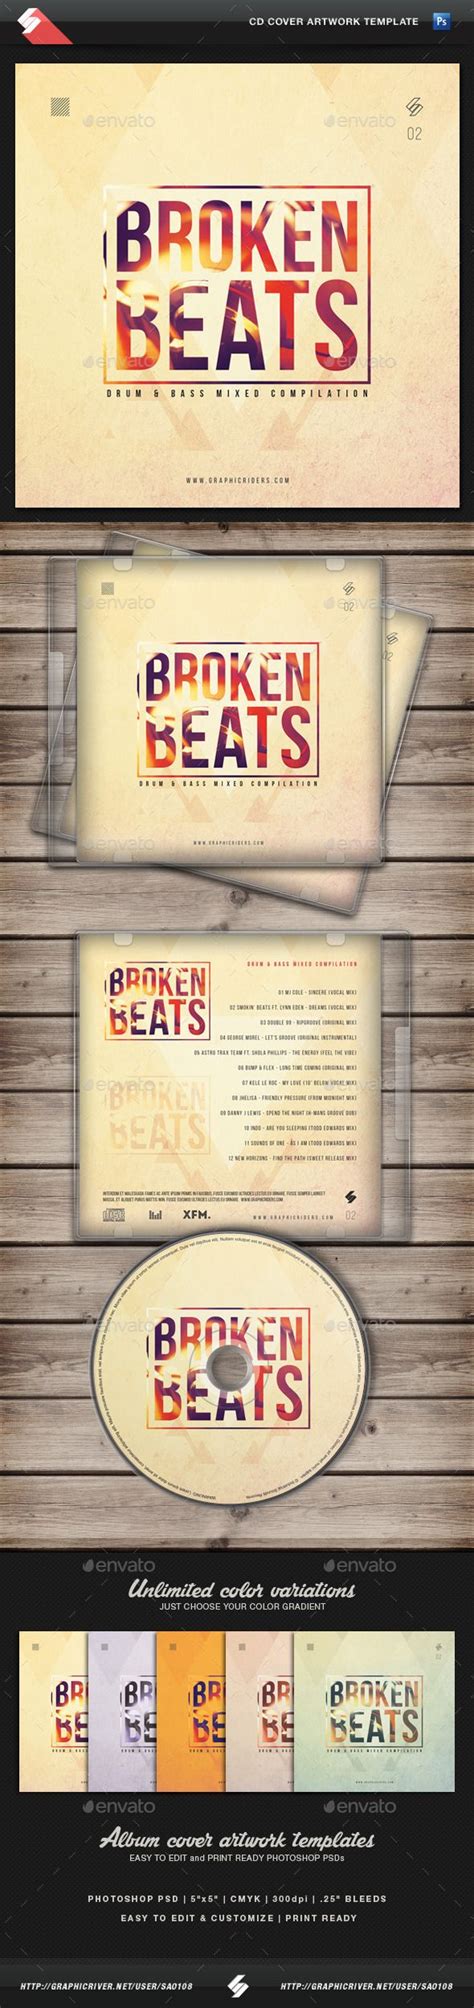 Broken Beats Vol Cd Cover Artwork Template Psd Download Here Graphicriver Net Item